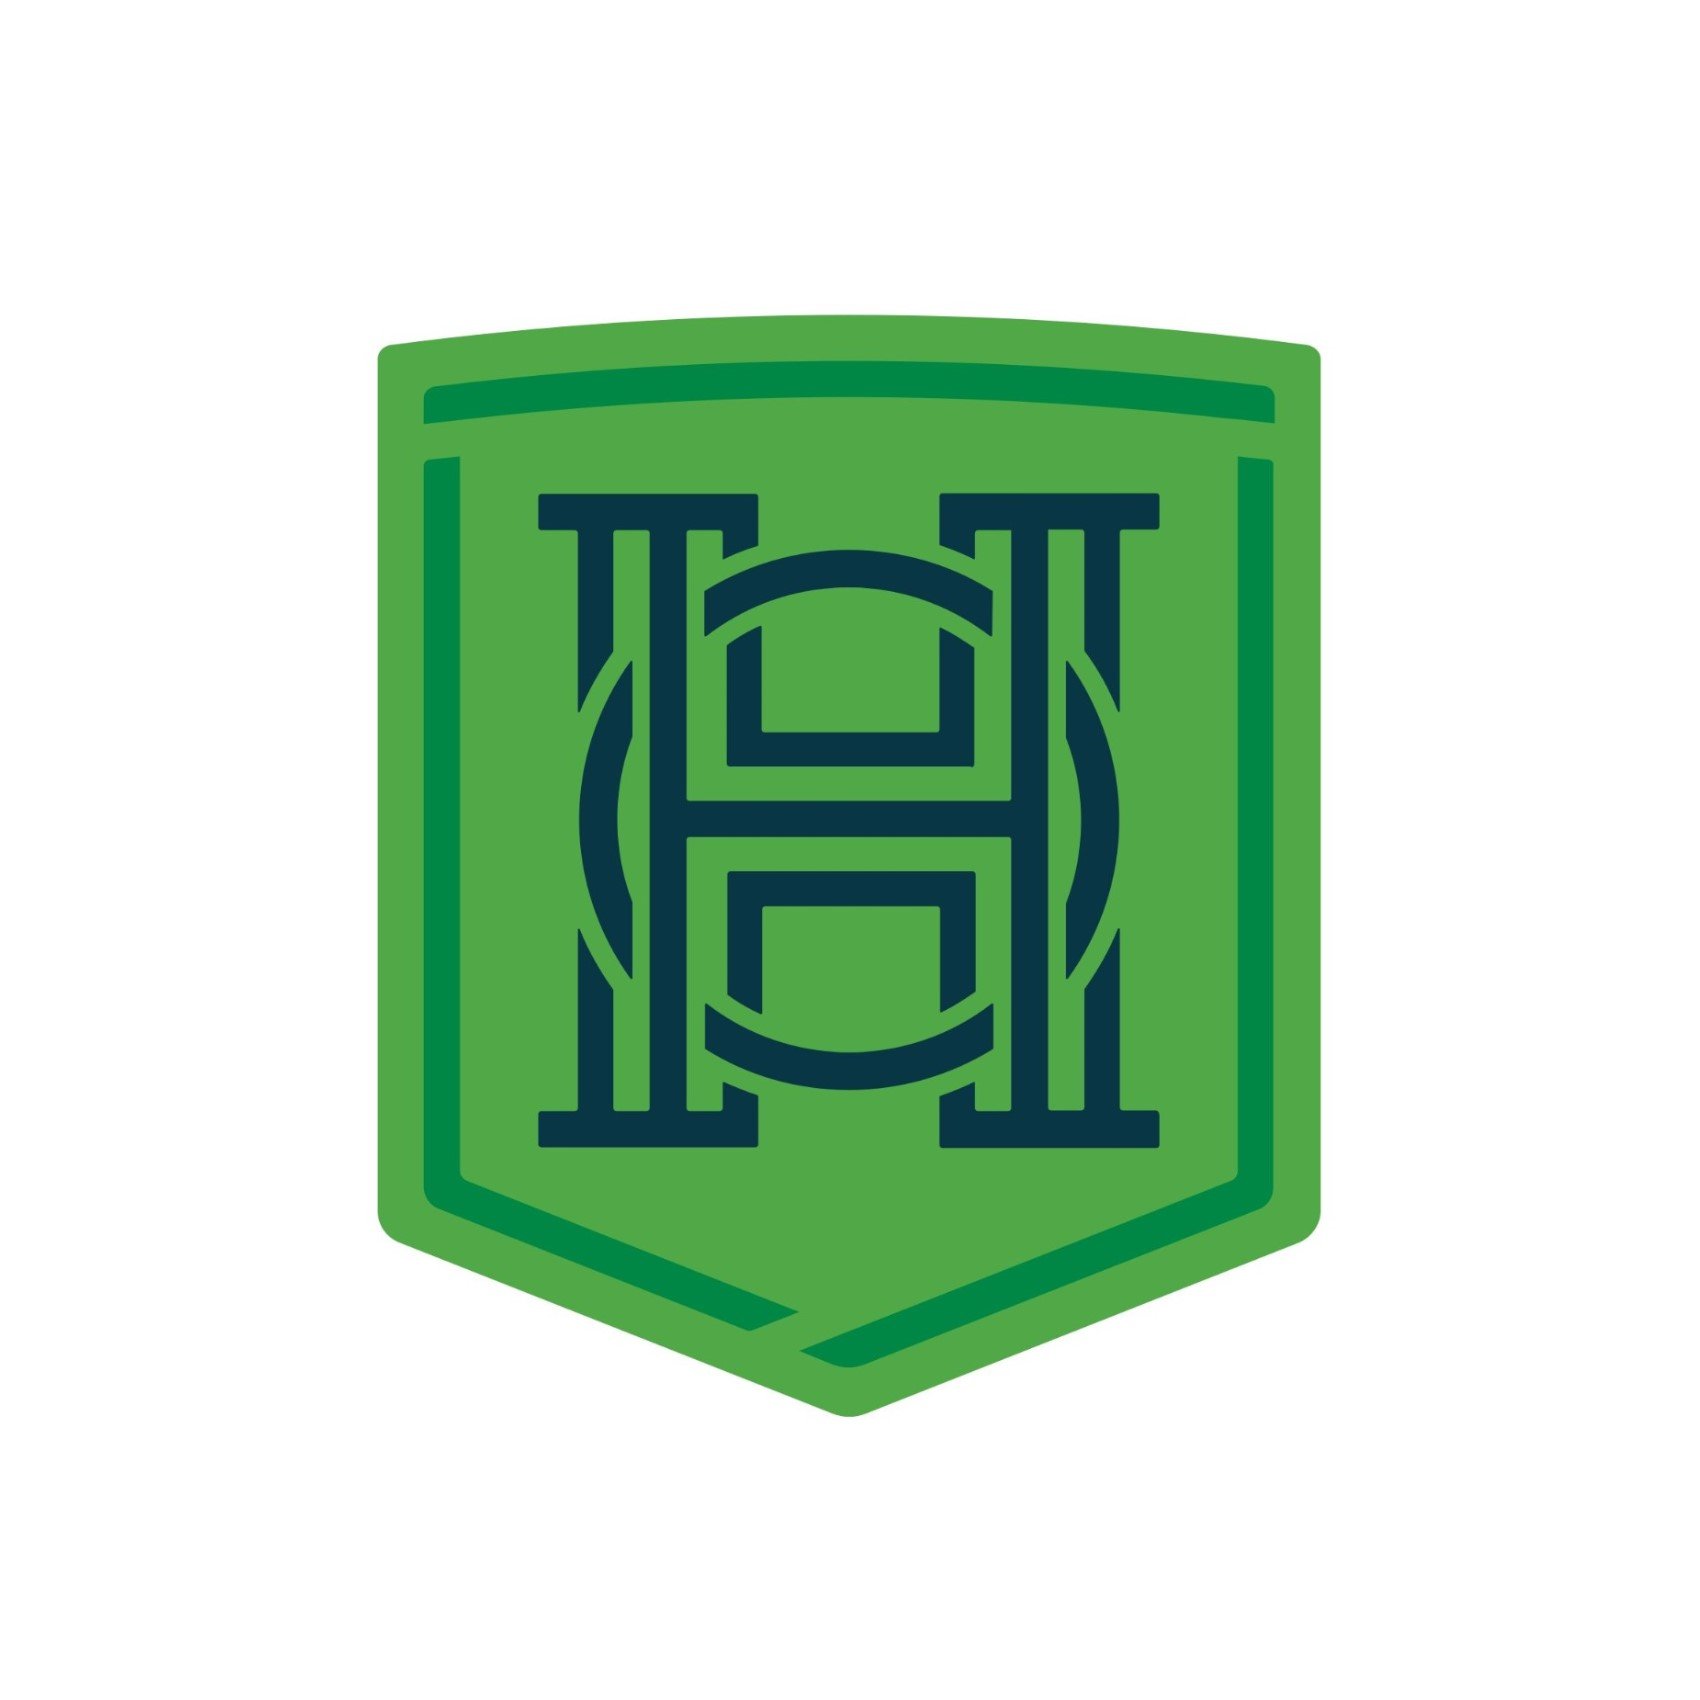 OHHS logo.jpg